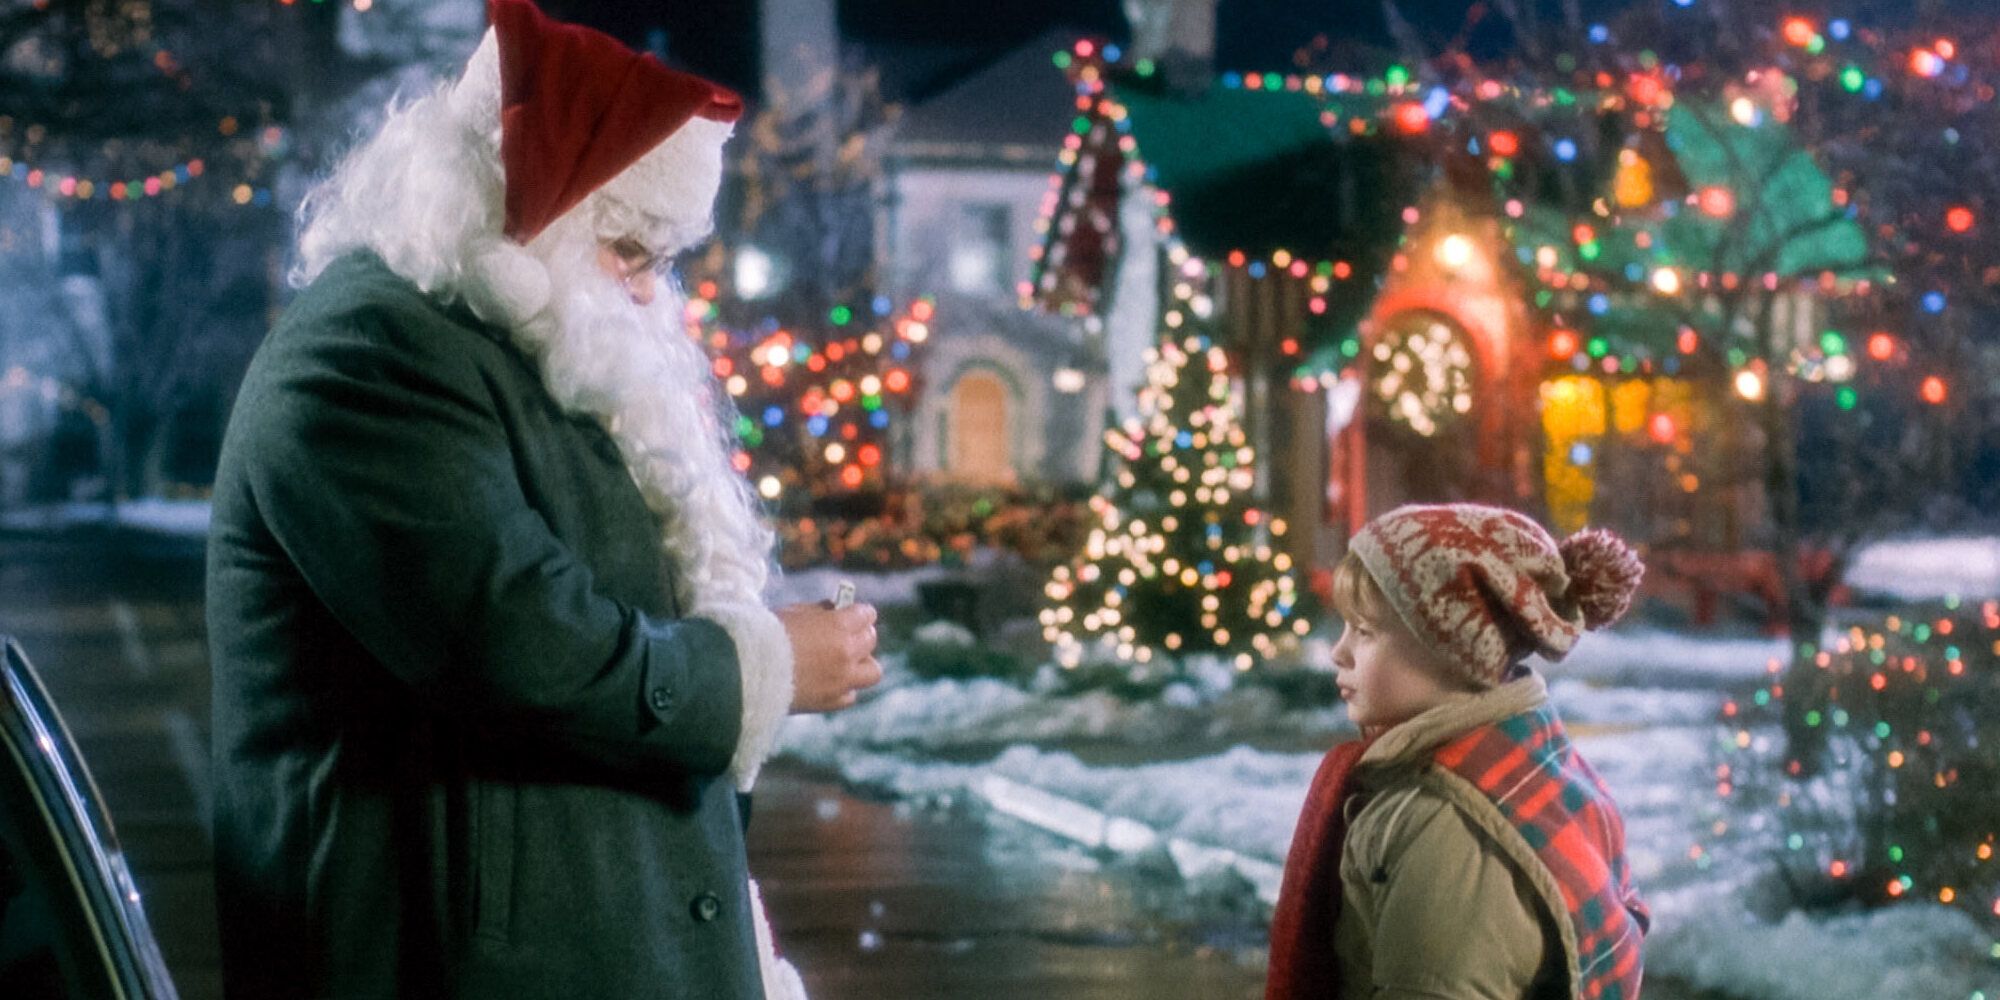 Santa With Macaulay Culkin As Kevin McCallister In Home Alone.jpg